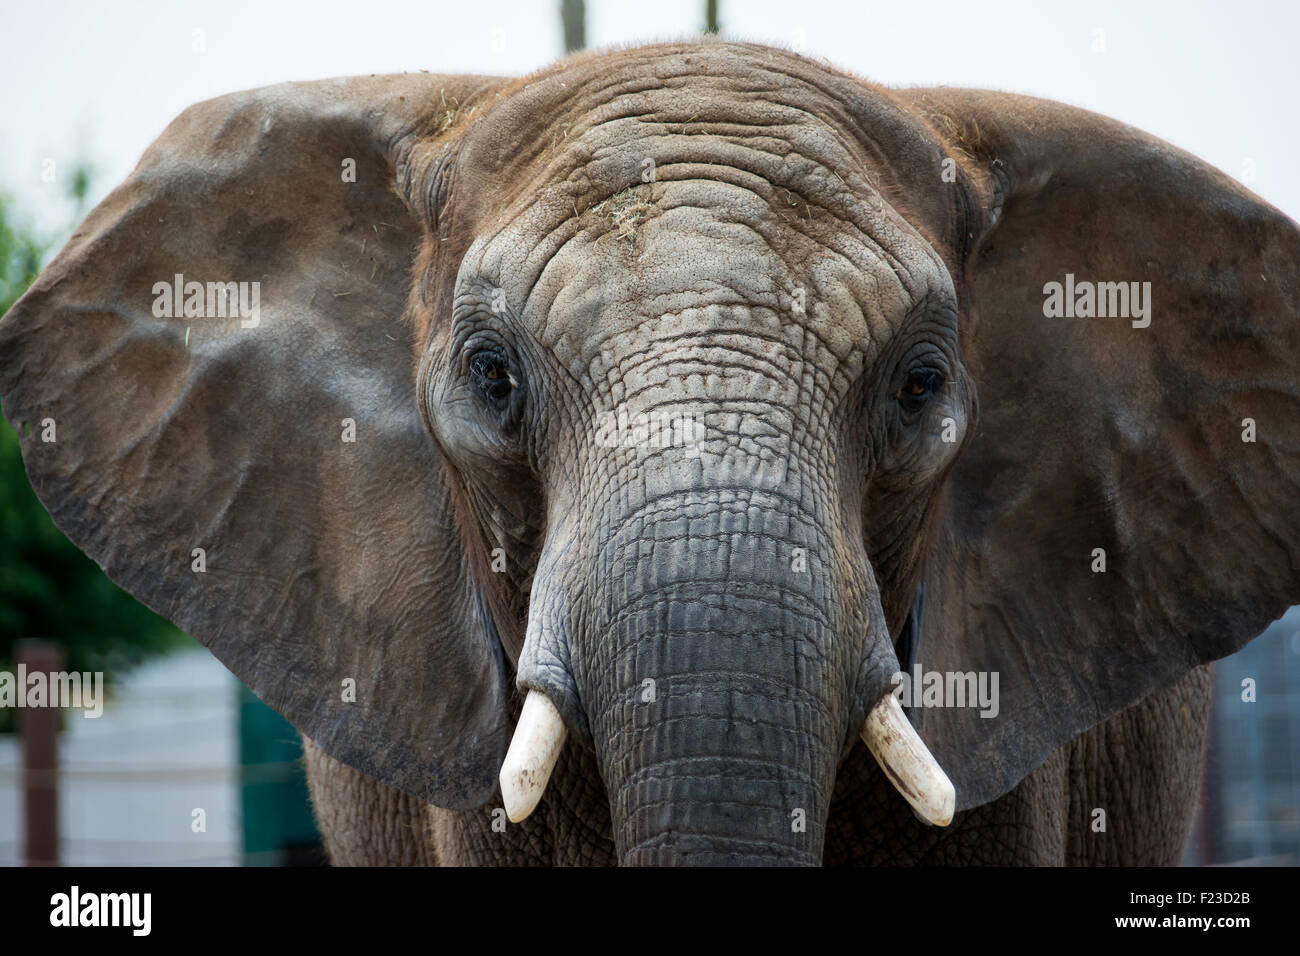 Adult elephant head Stock Photo